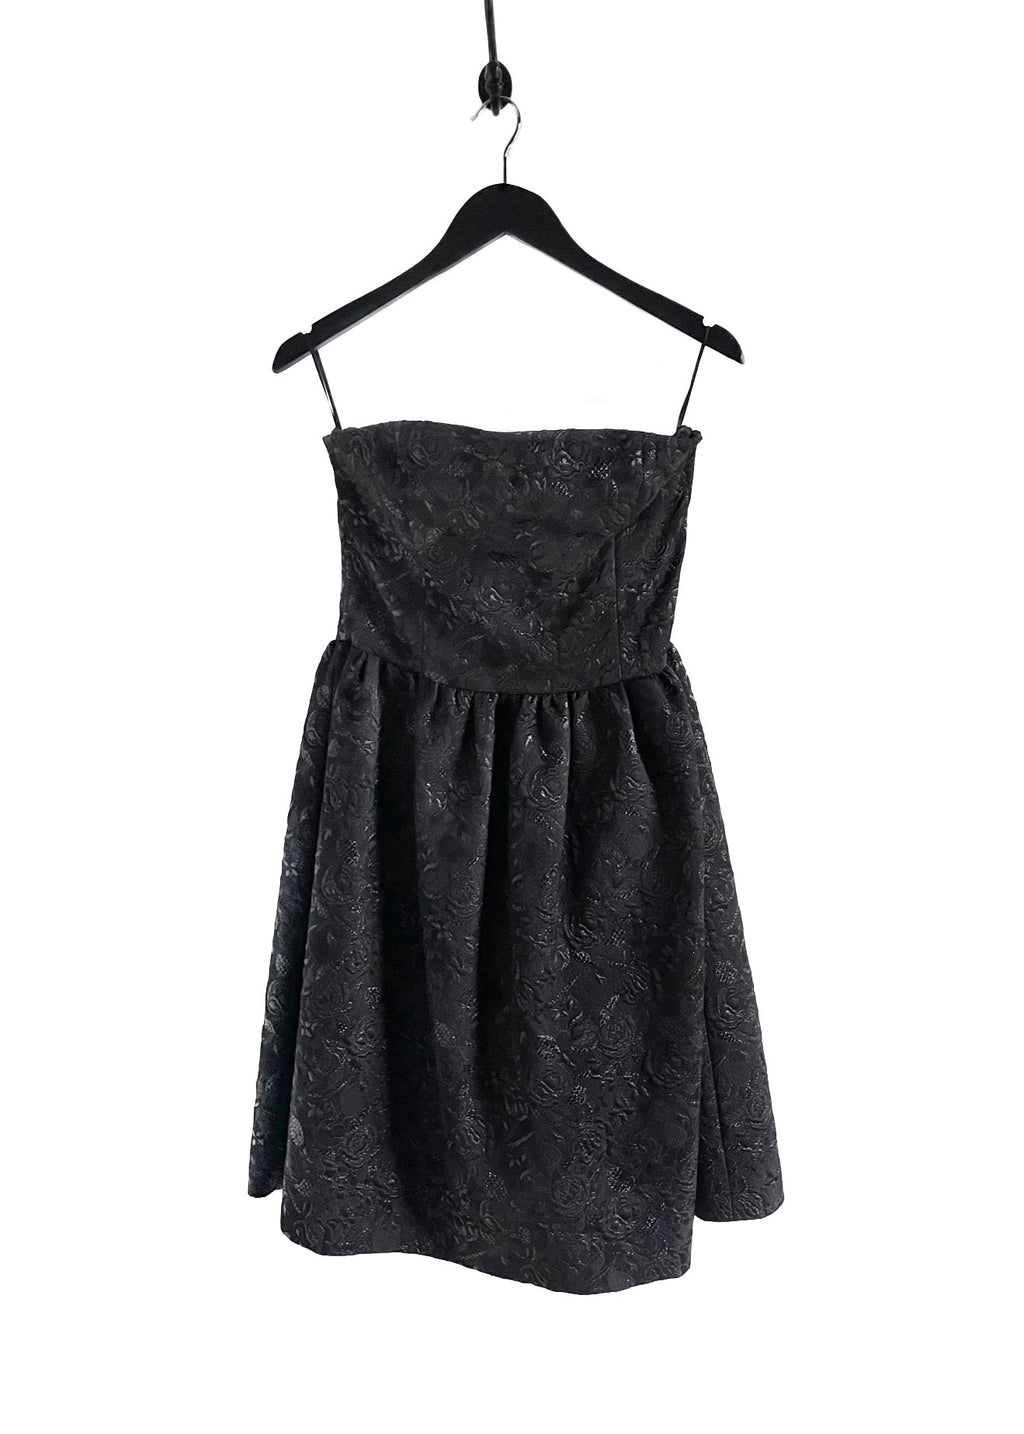 Prada 2010 Black Floral Jacquard Strapless Bustier Dress